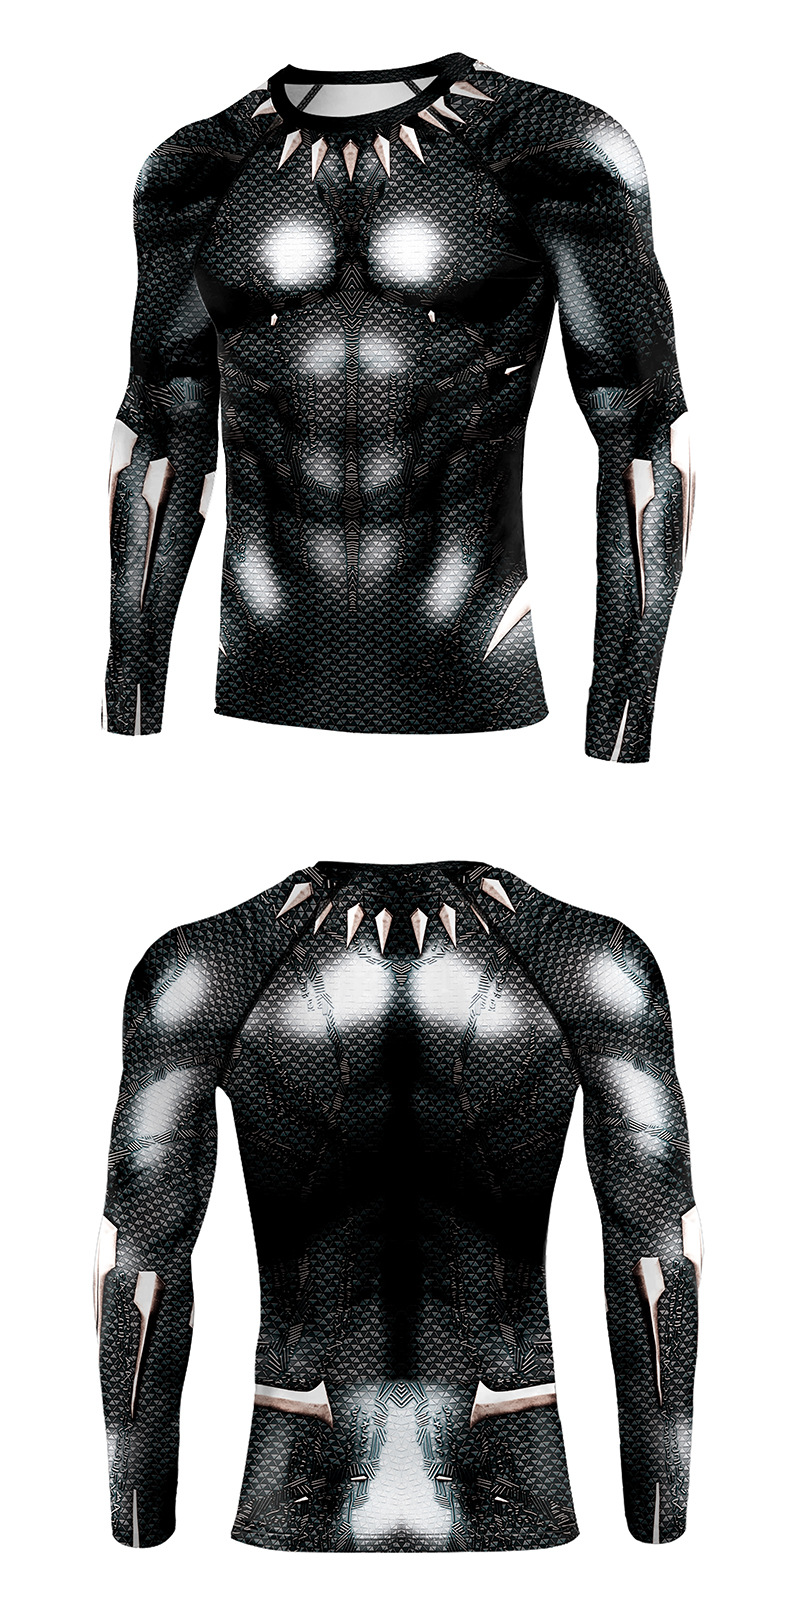 Marvel Comic Superhero Black Panther Costume Shirt Front and Back